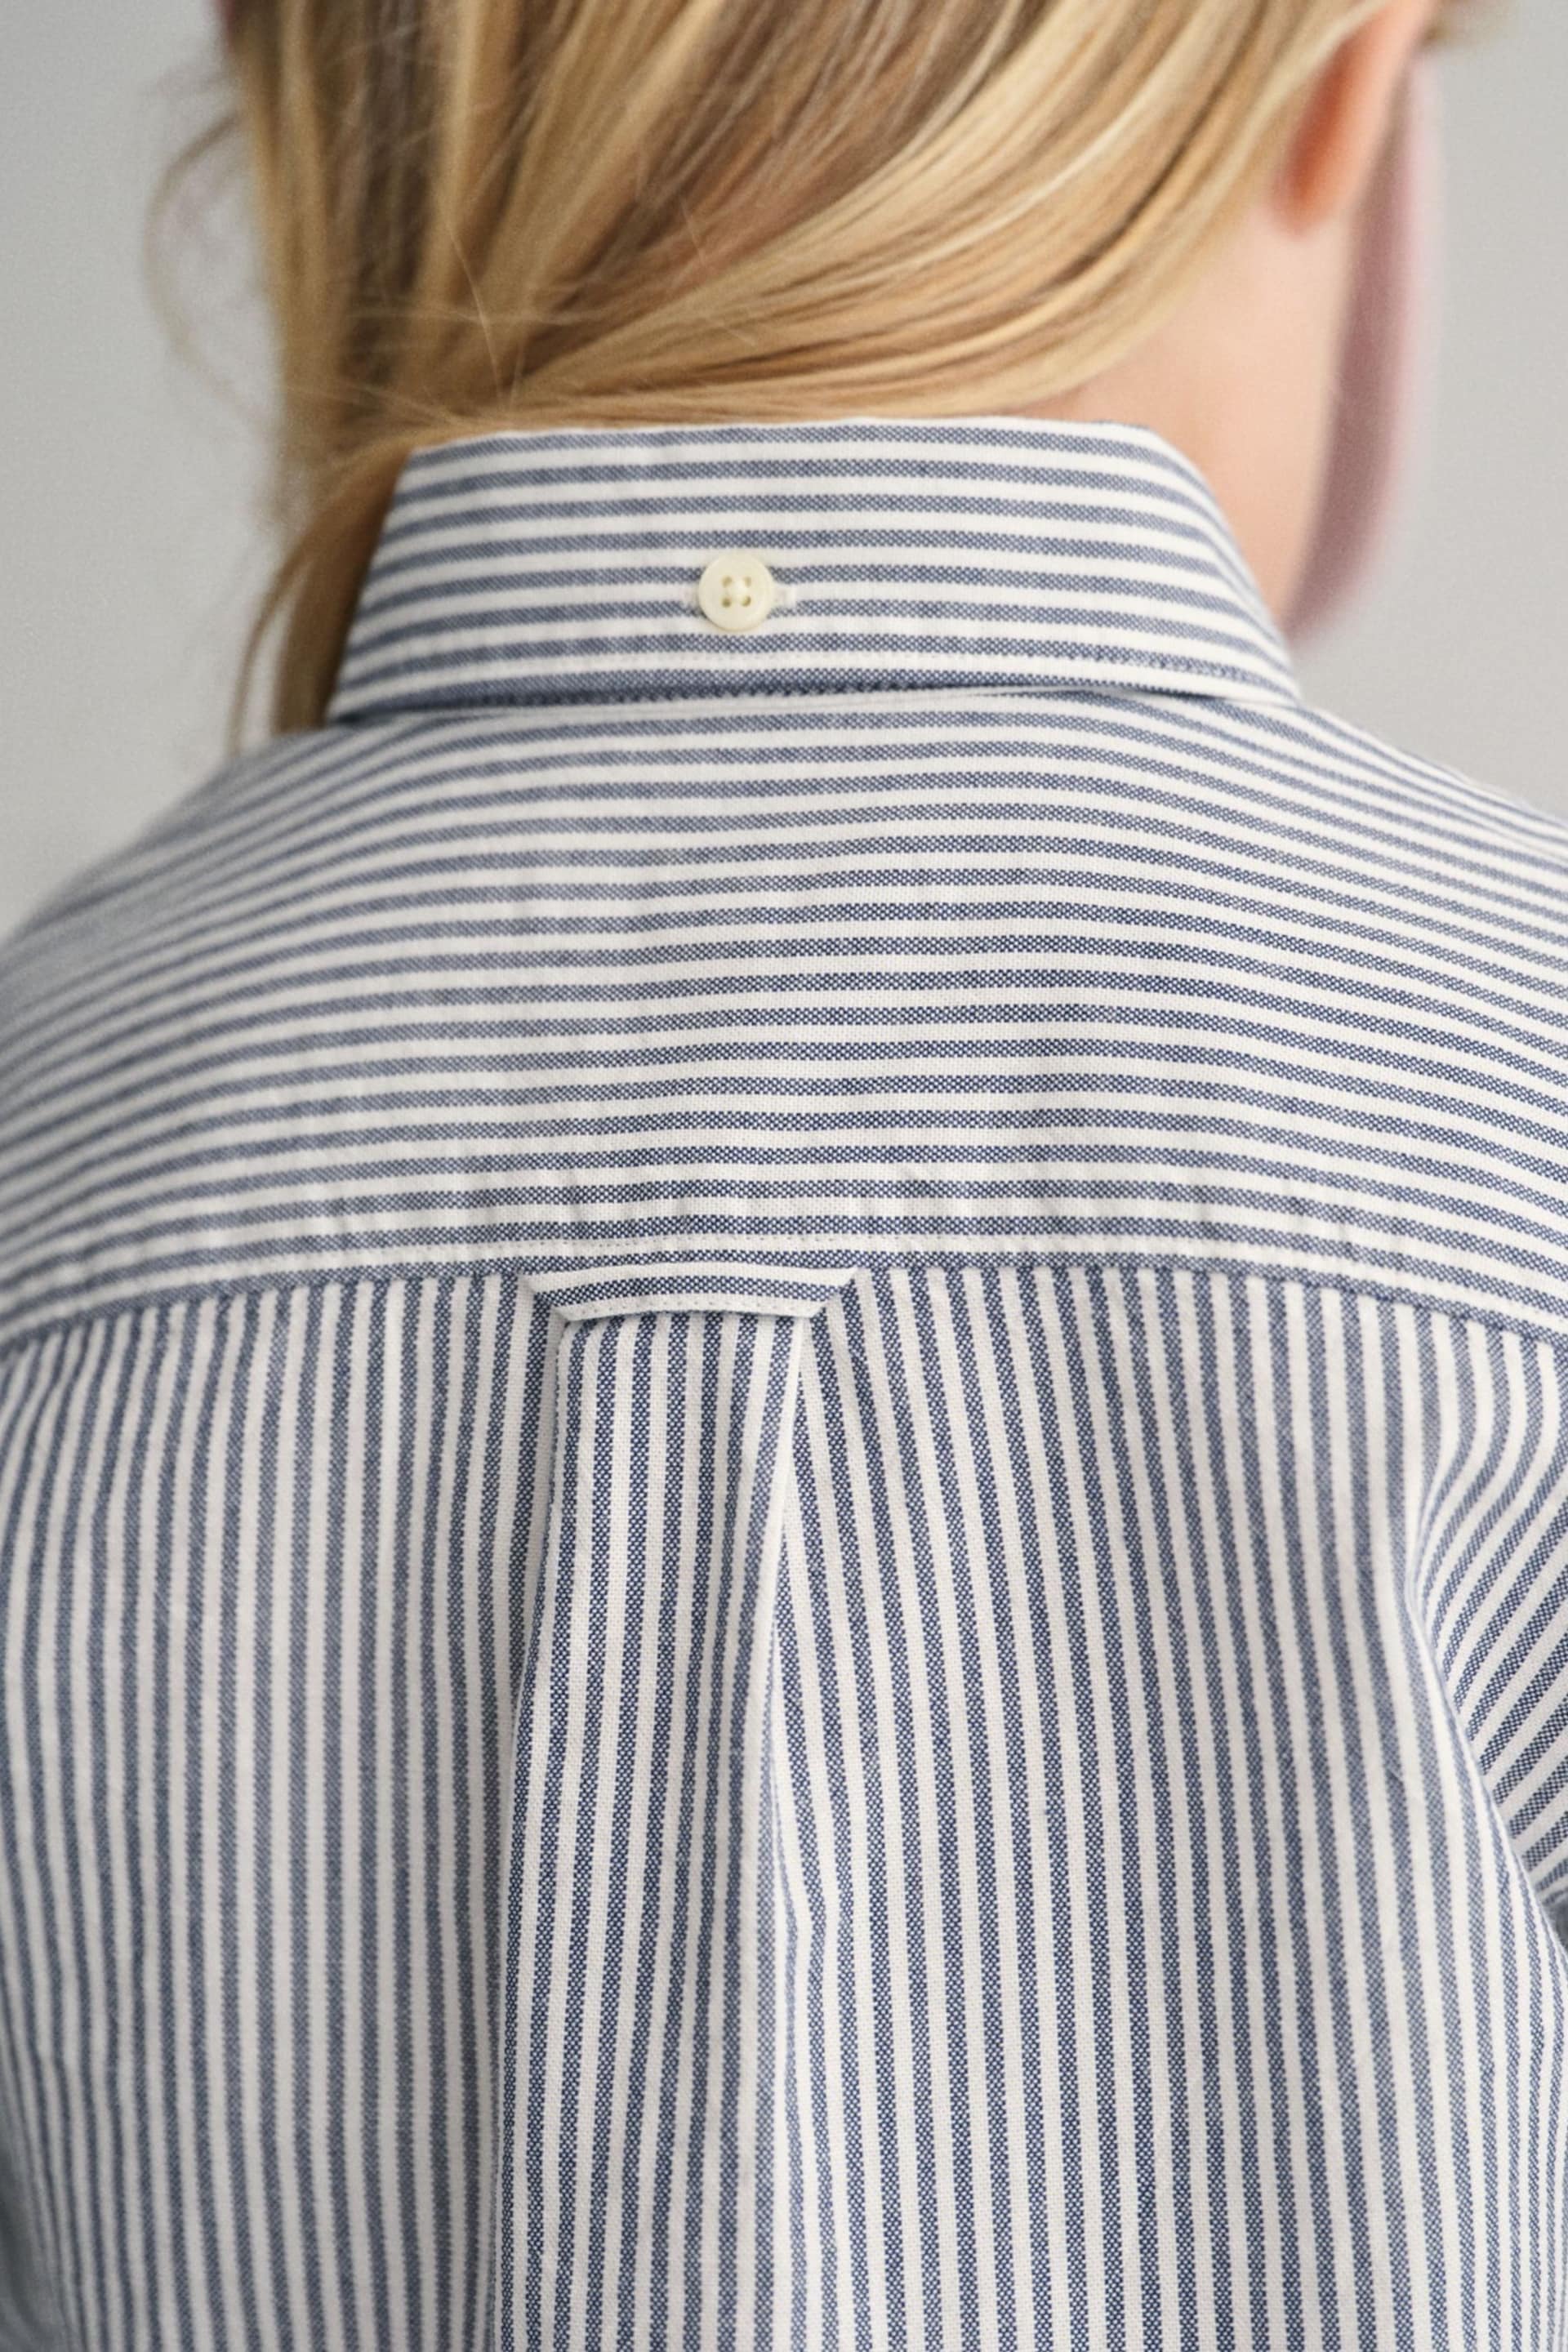 GANT Kids Shield Striped Oxford Shirt - Image 5 of 8